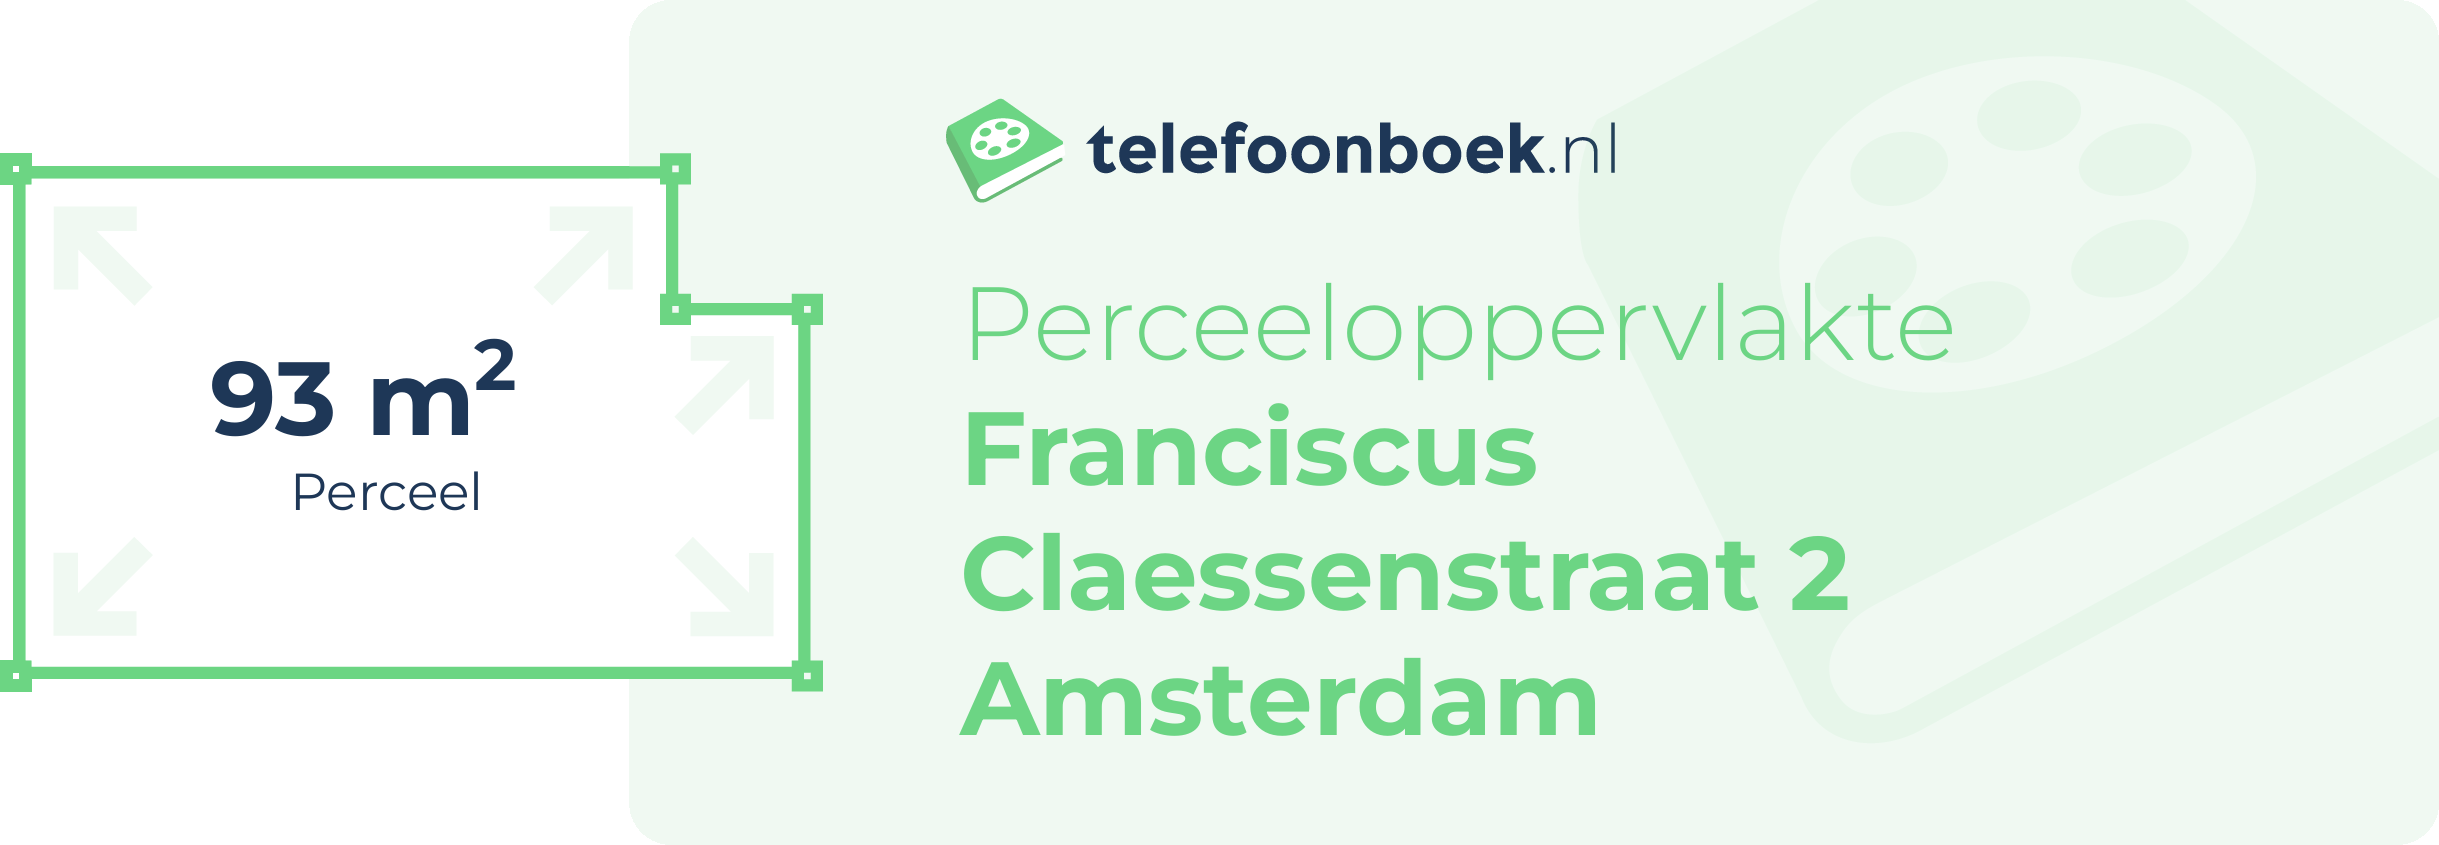 Perceeloppervlakte Franciscus Claessenstraat 2 Amsterdam